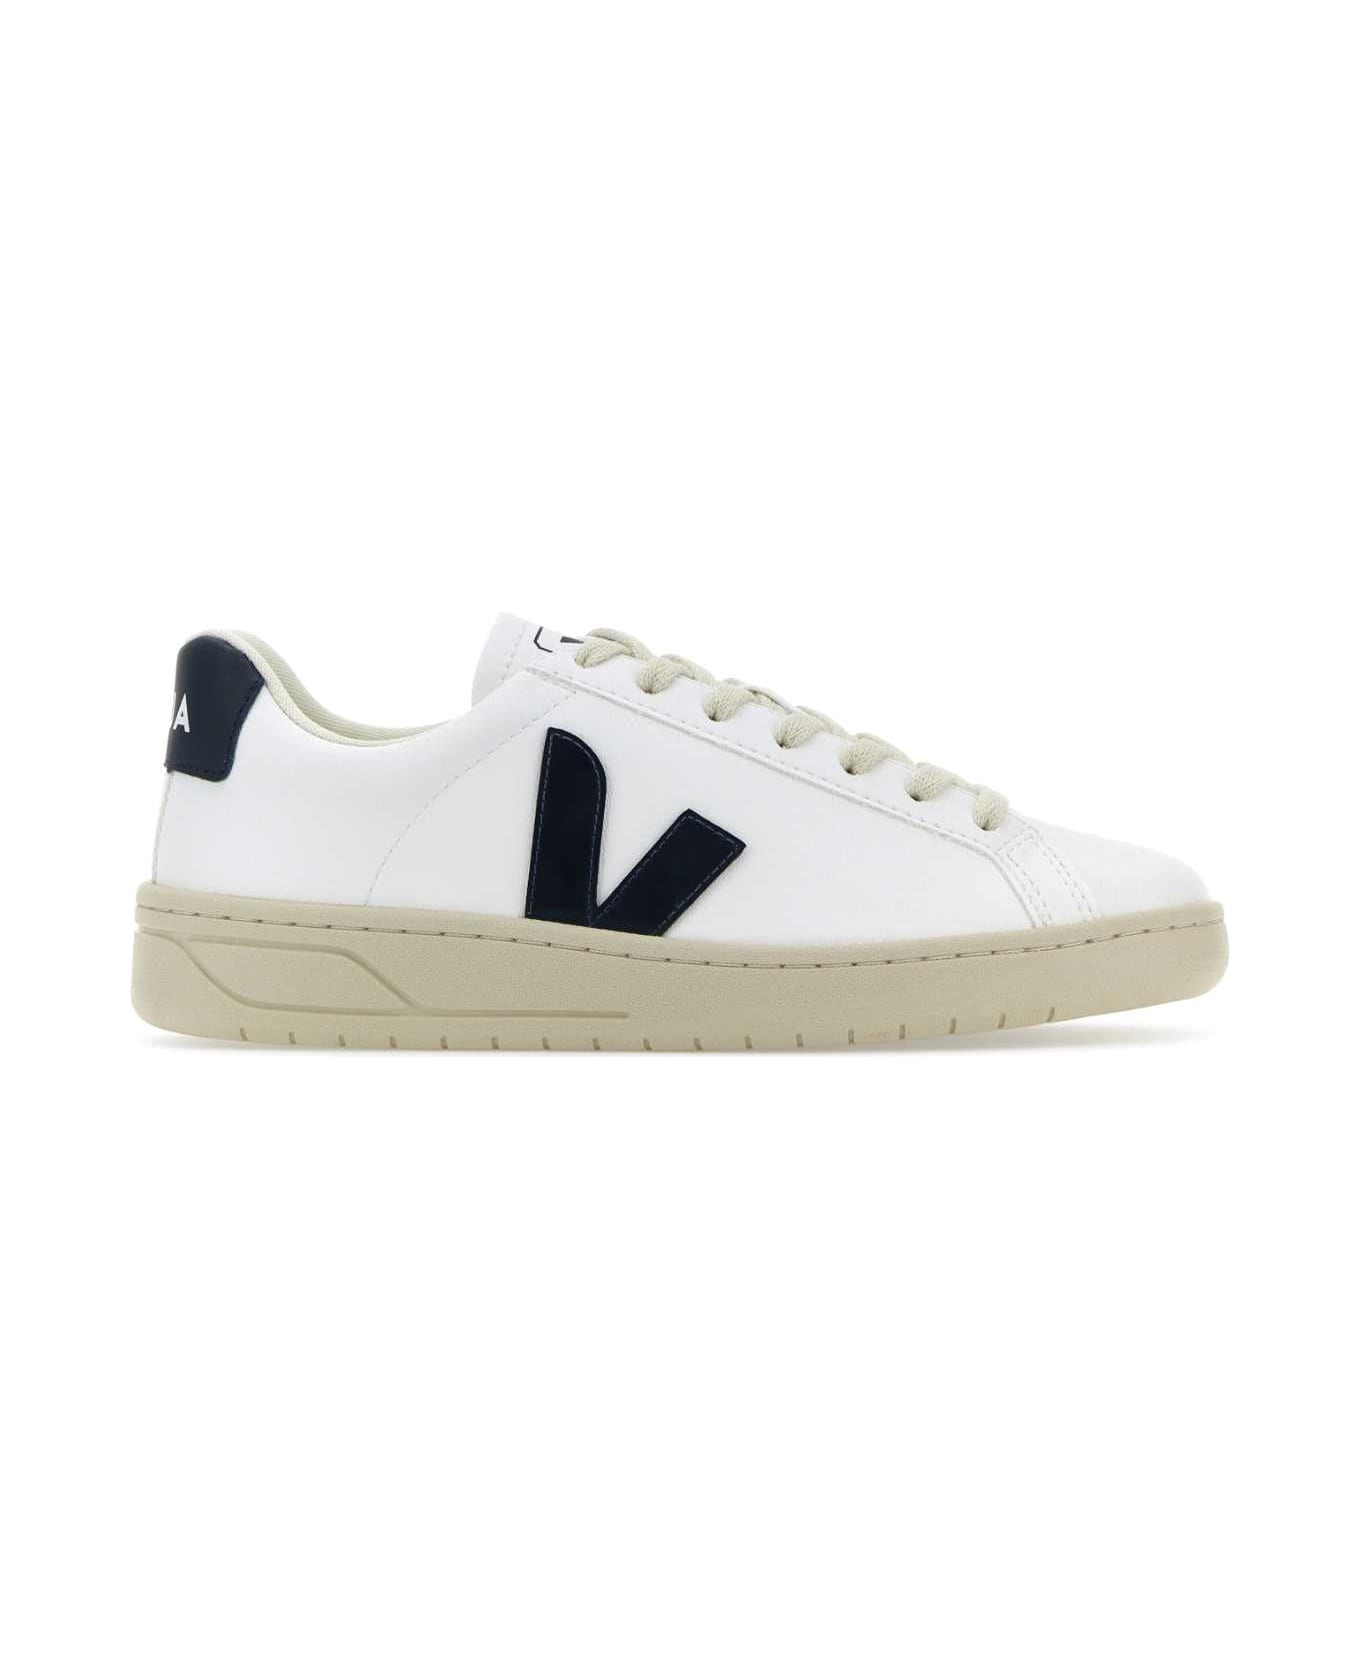 Veja White Synthetic Leather Urca Sneakers - WHITENAUTICO スニーカー